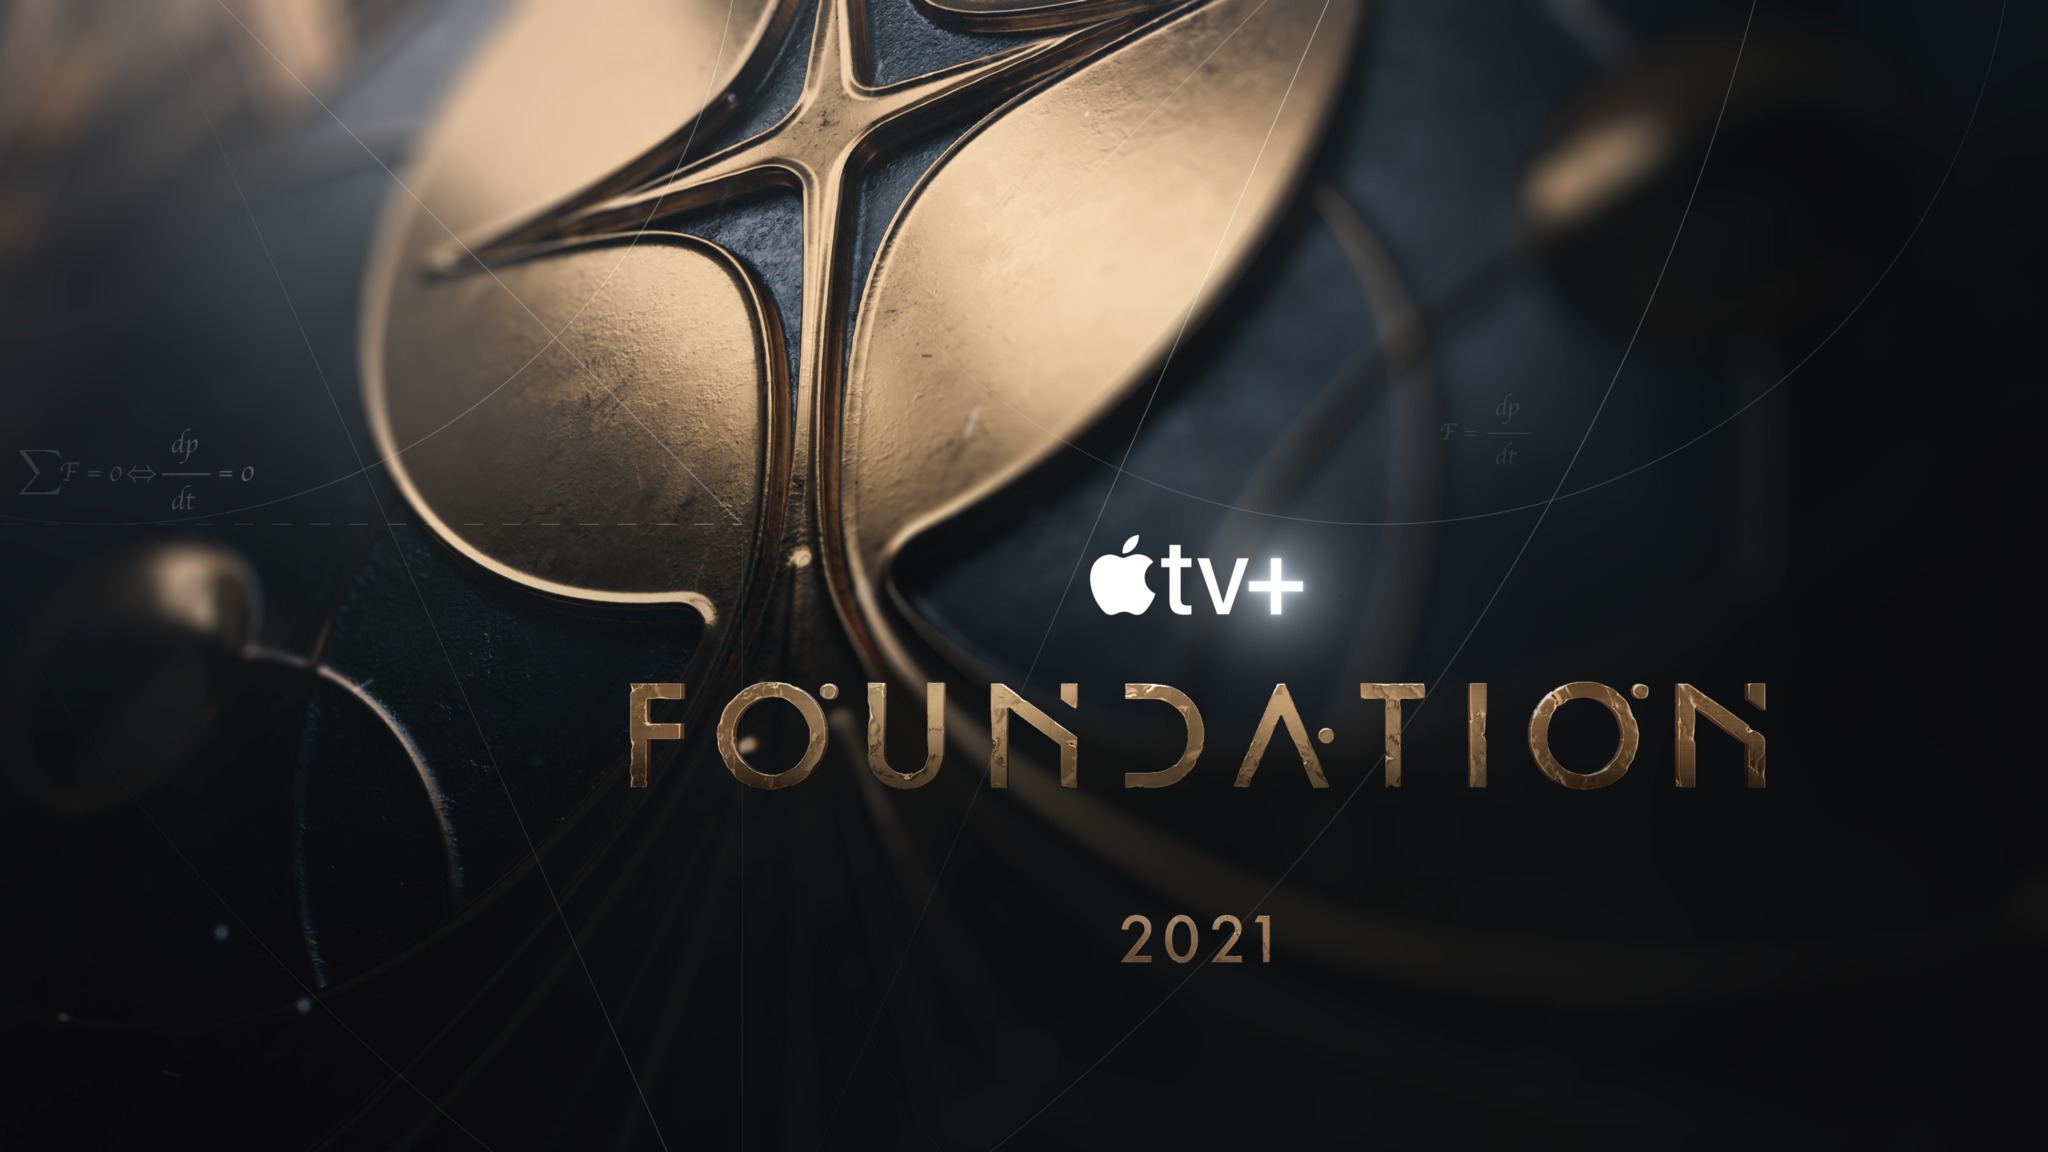 Apple TV+ Foundation